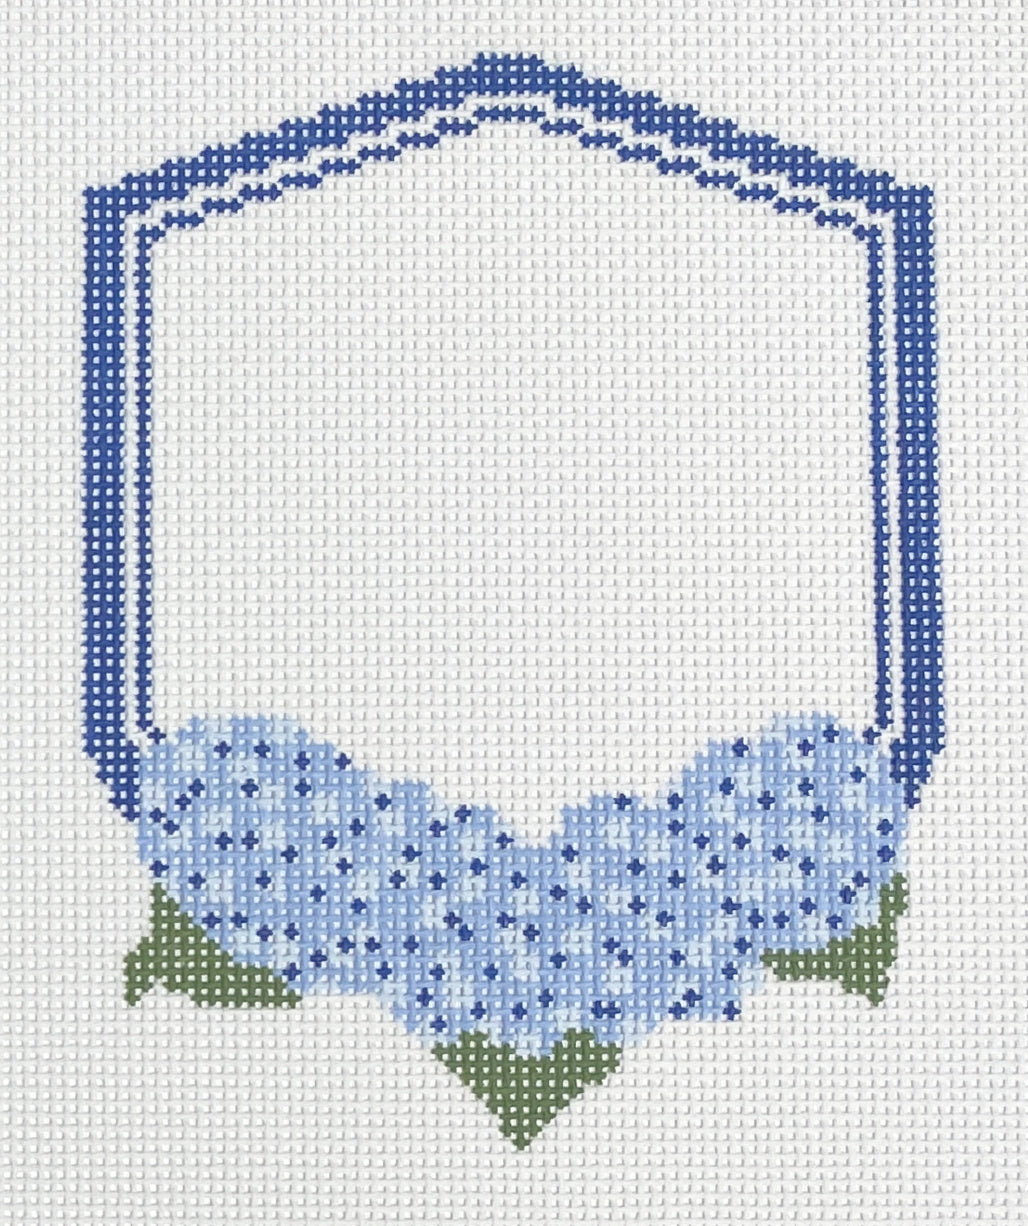 blue crest with hydrangeas